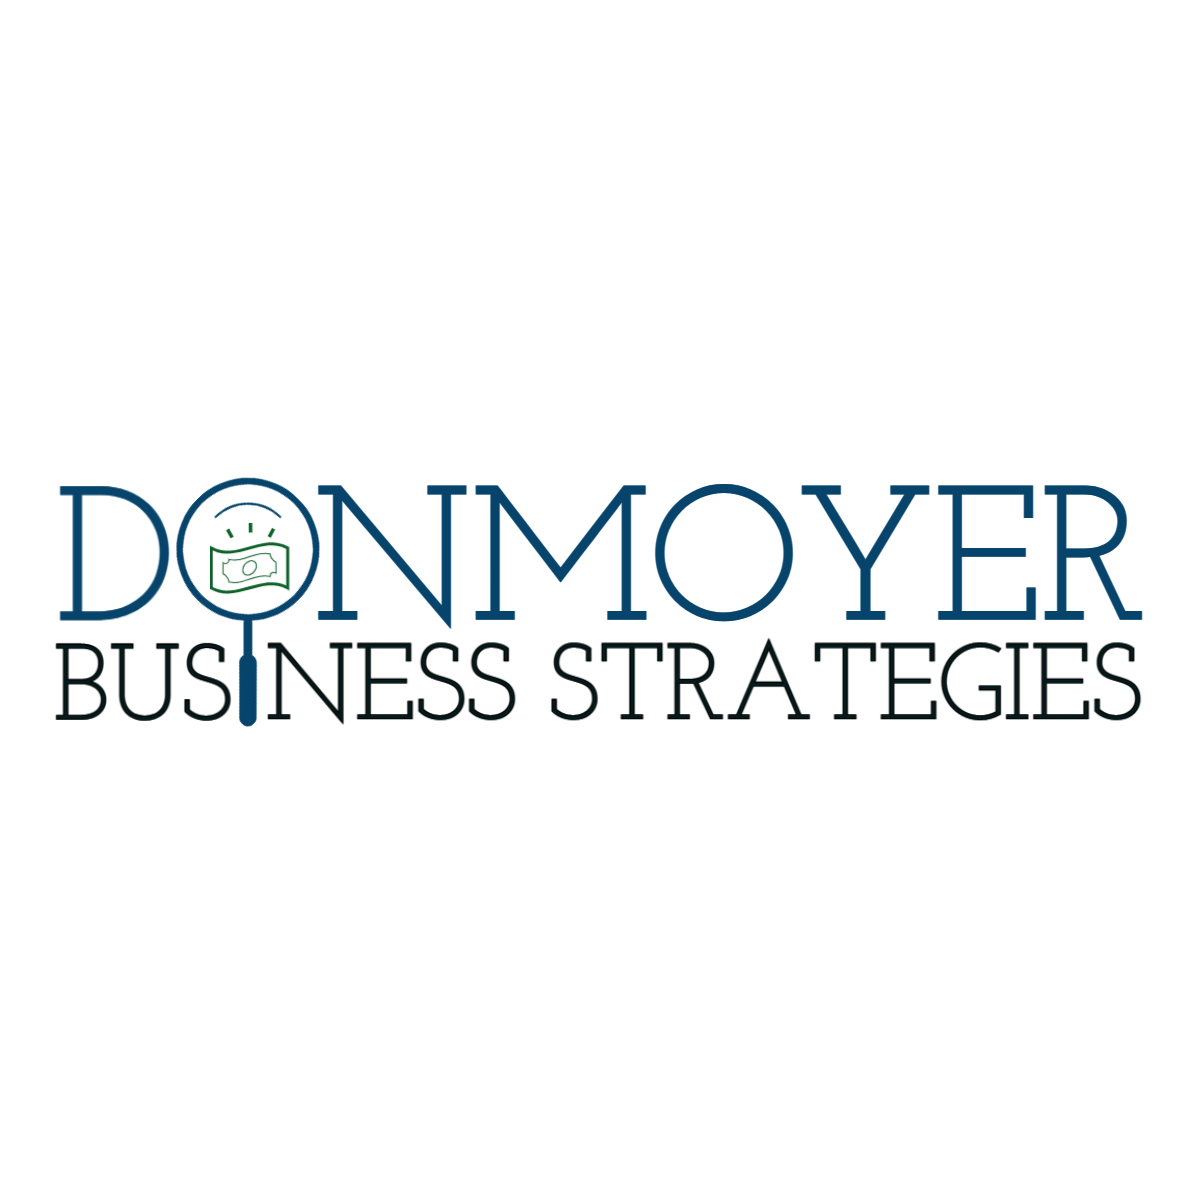 Donmoyer Business Strategies